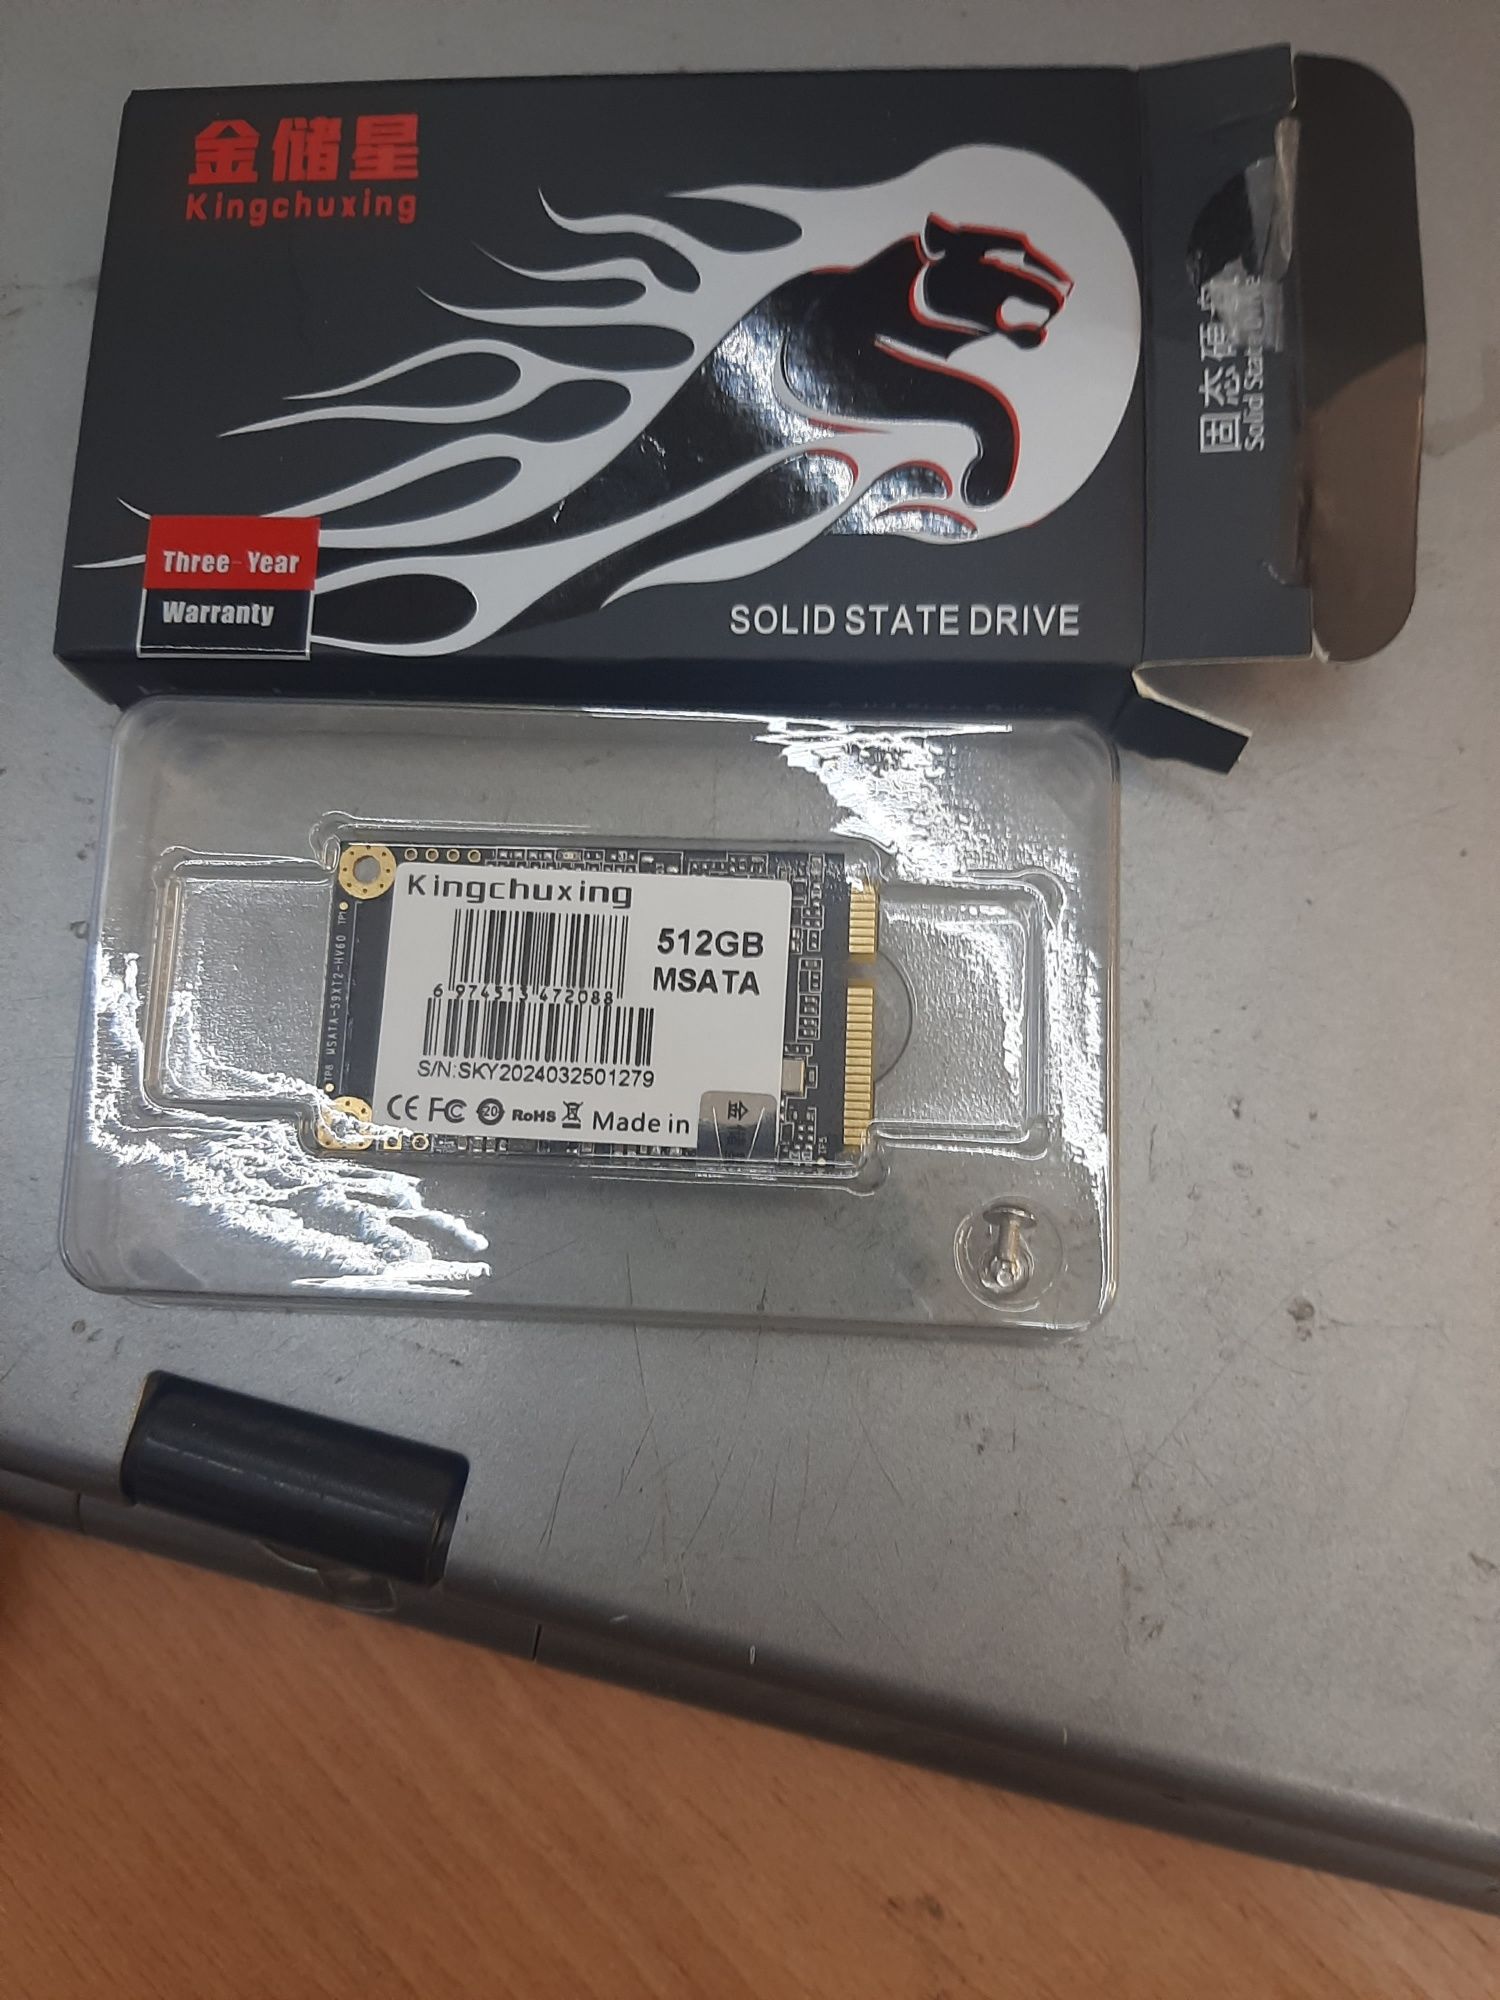 Ssd 512gb internal ssd hard disk